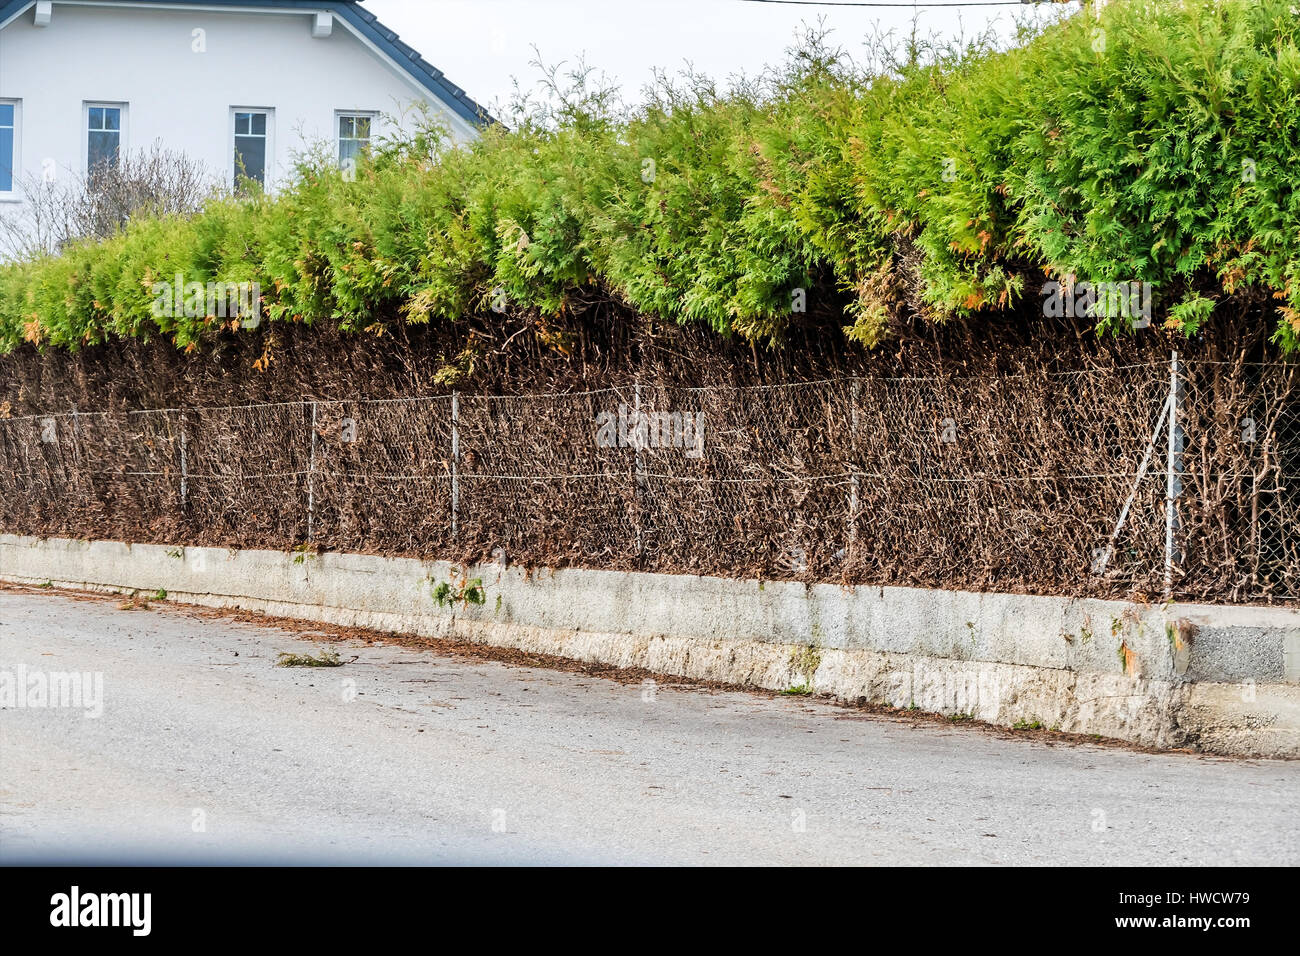 Fence and green hedge, symbol for growth, privacy, change of generations, Zaun und grüne Hecke, Symbol für Wachstum, Privatsphäre, Generationswechsel Stock Photo